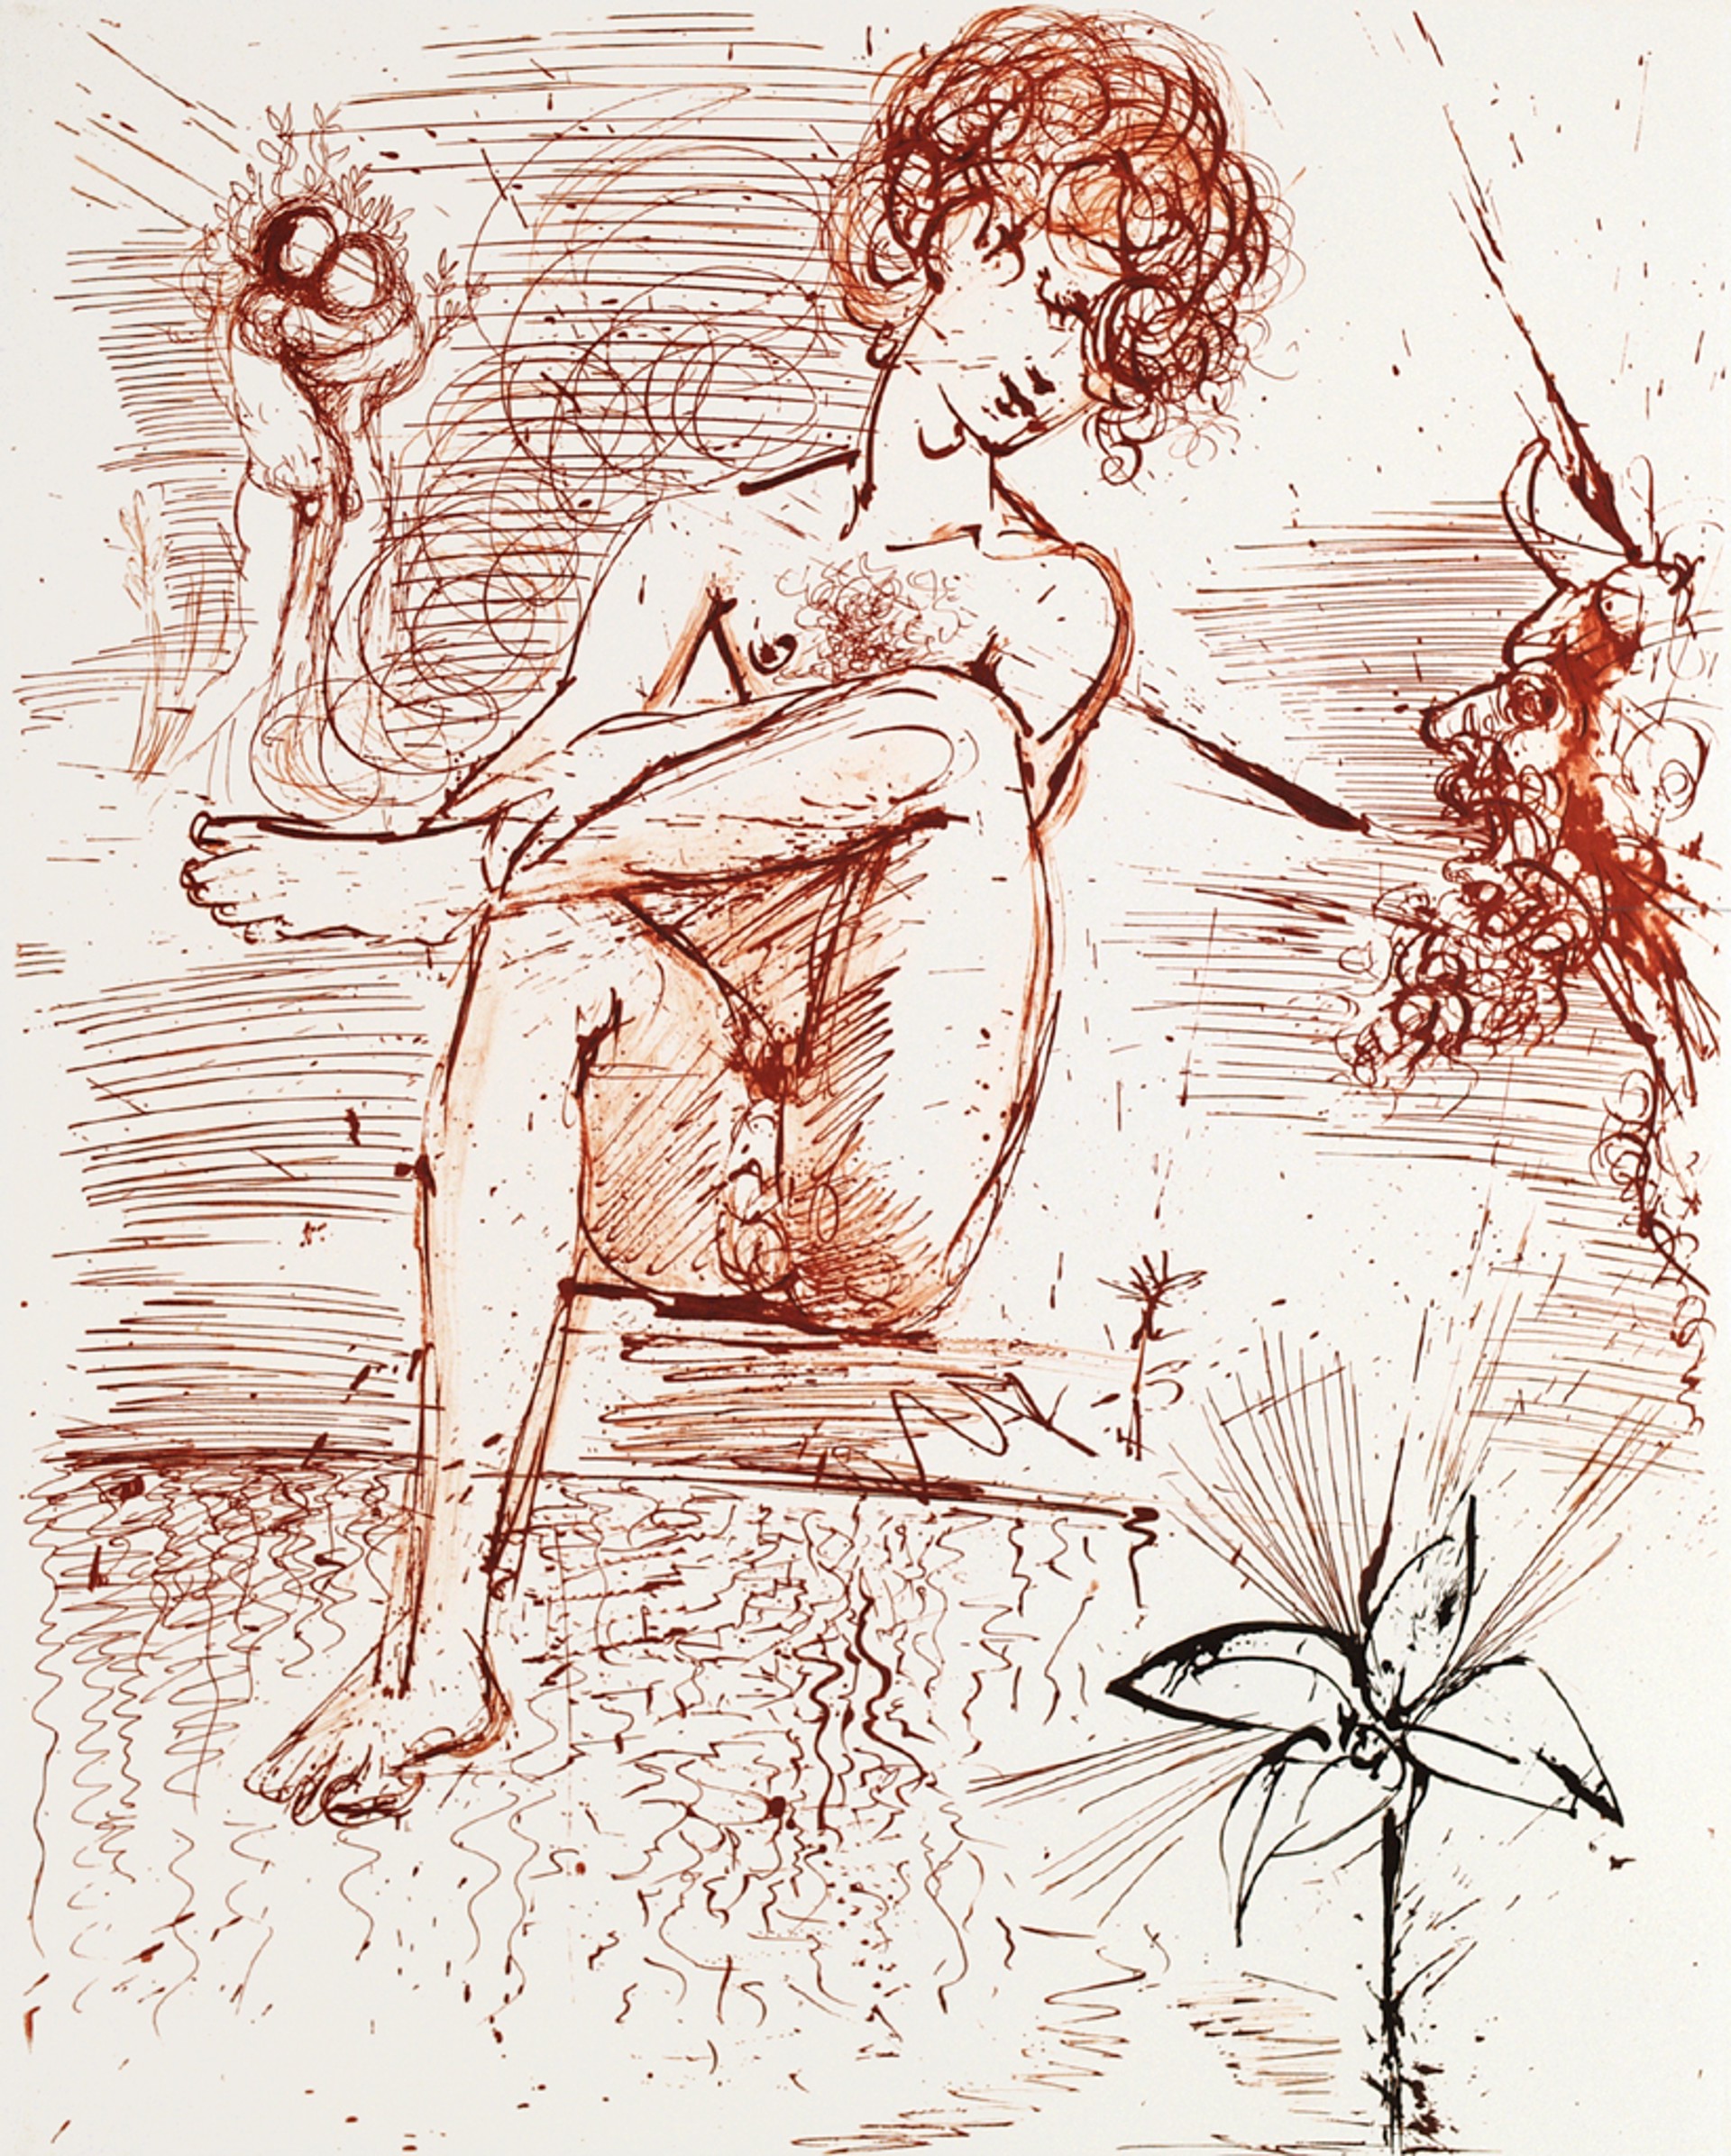 Mythology "Narcissus" by Salvador Dali